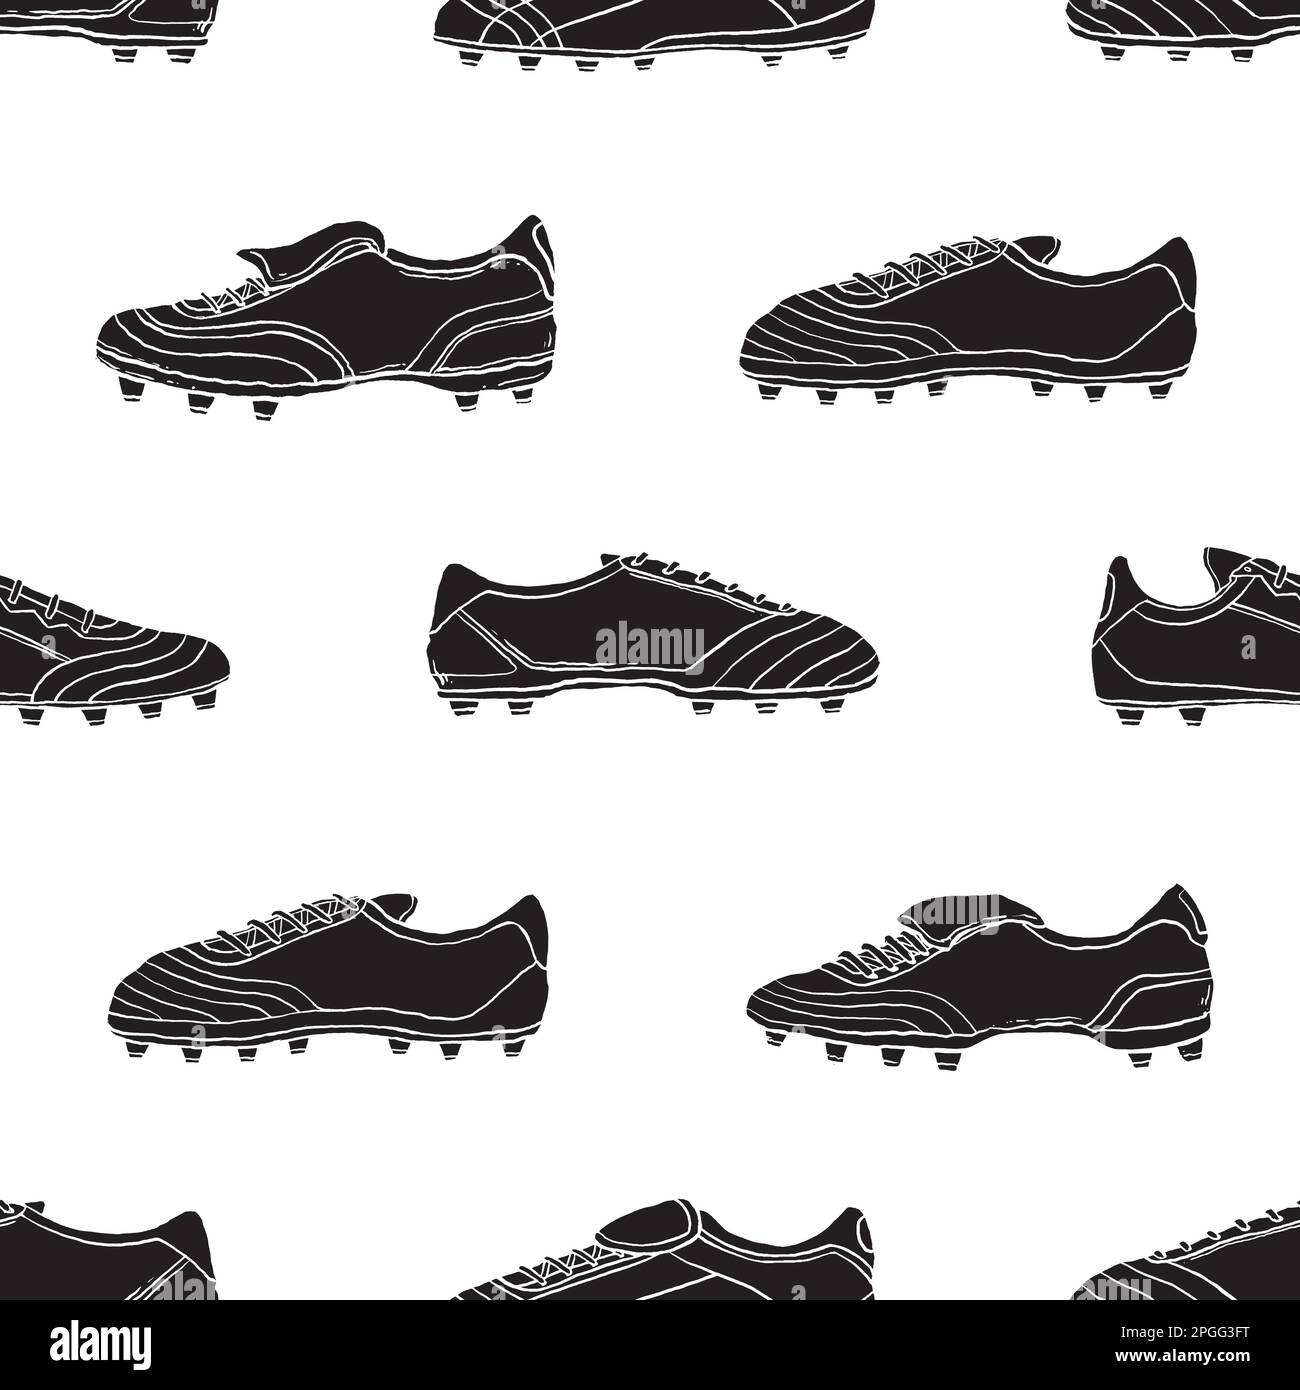 Retro Football boots doodle seamless pattern. Cartoon illustration vector illustration background. For print, textile, web, home decor, fashion, surfa Stock Vector